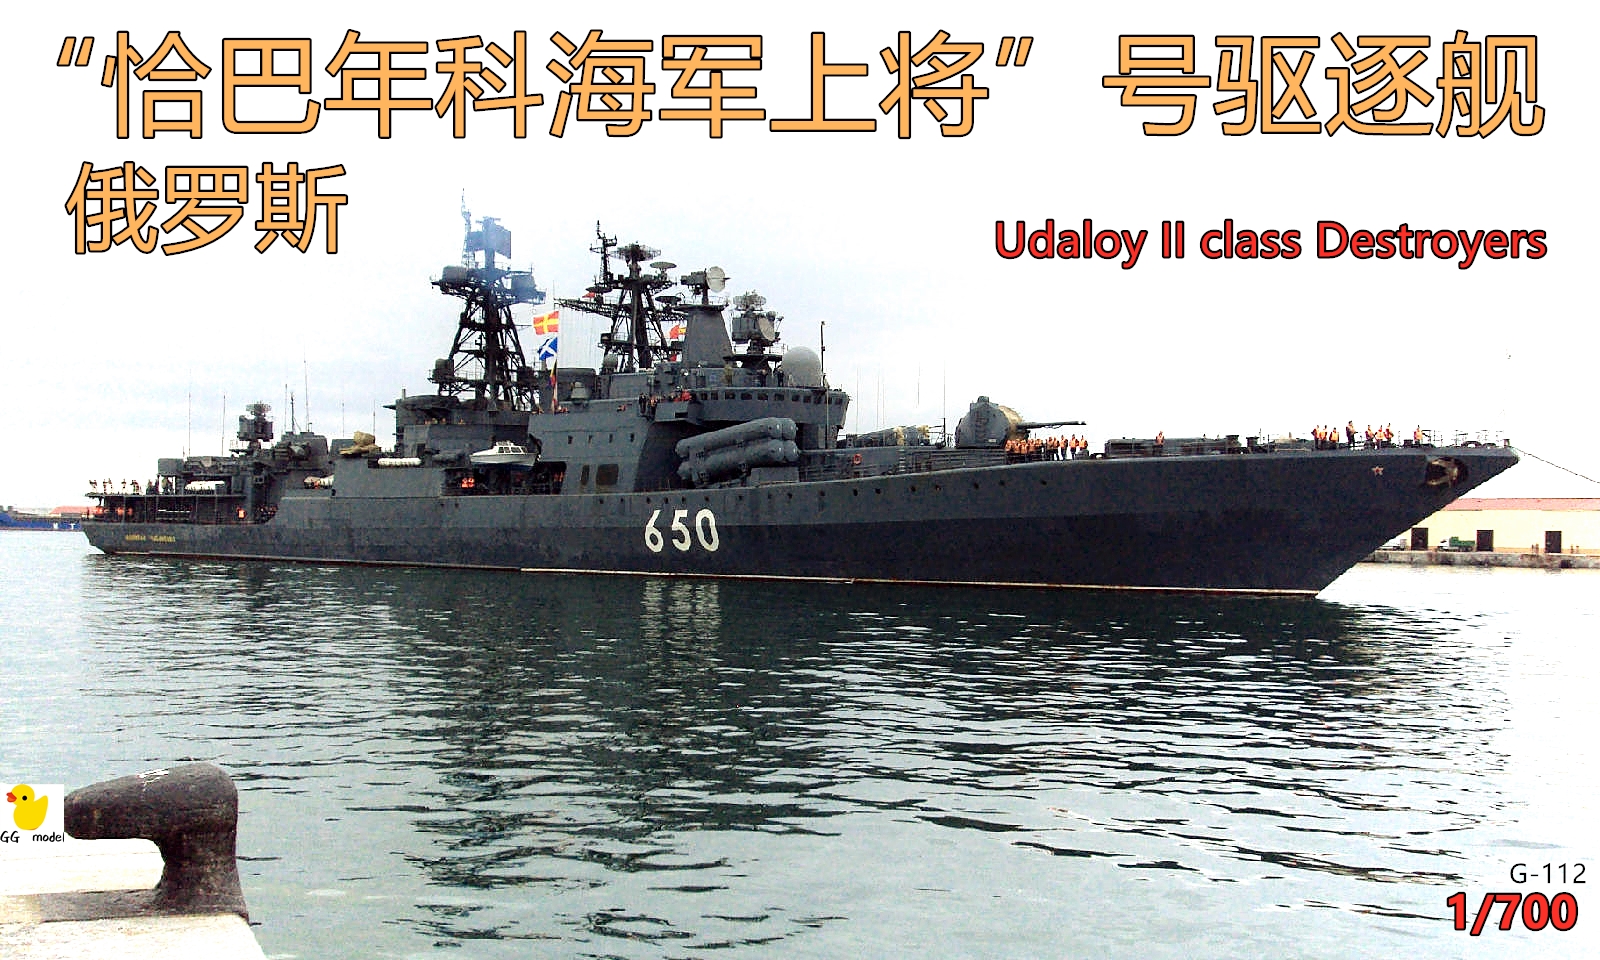 G-112俄罗斯1/700 “恰巴年科上将”无畏2级驱逐舰勇敢2树脂船模